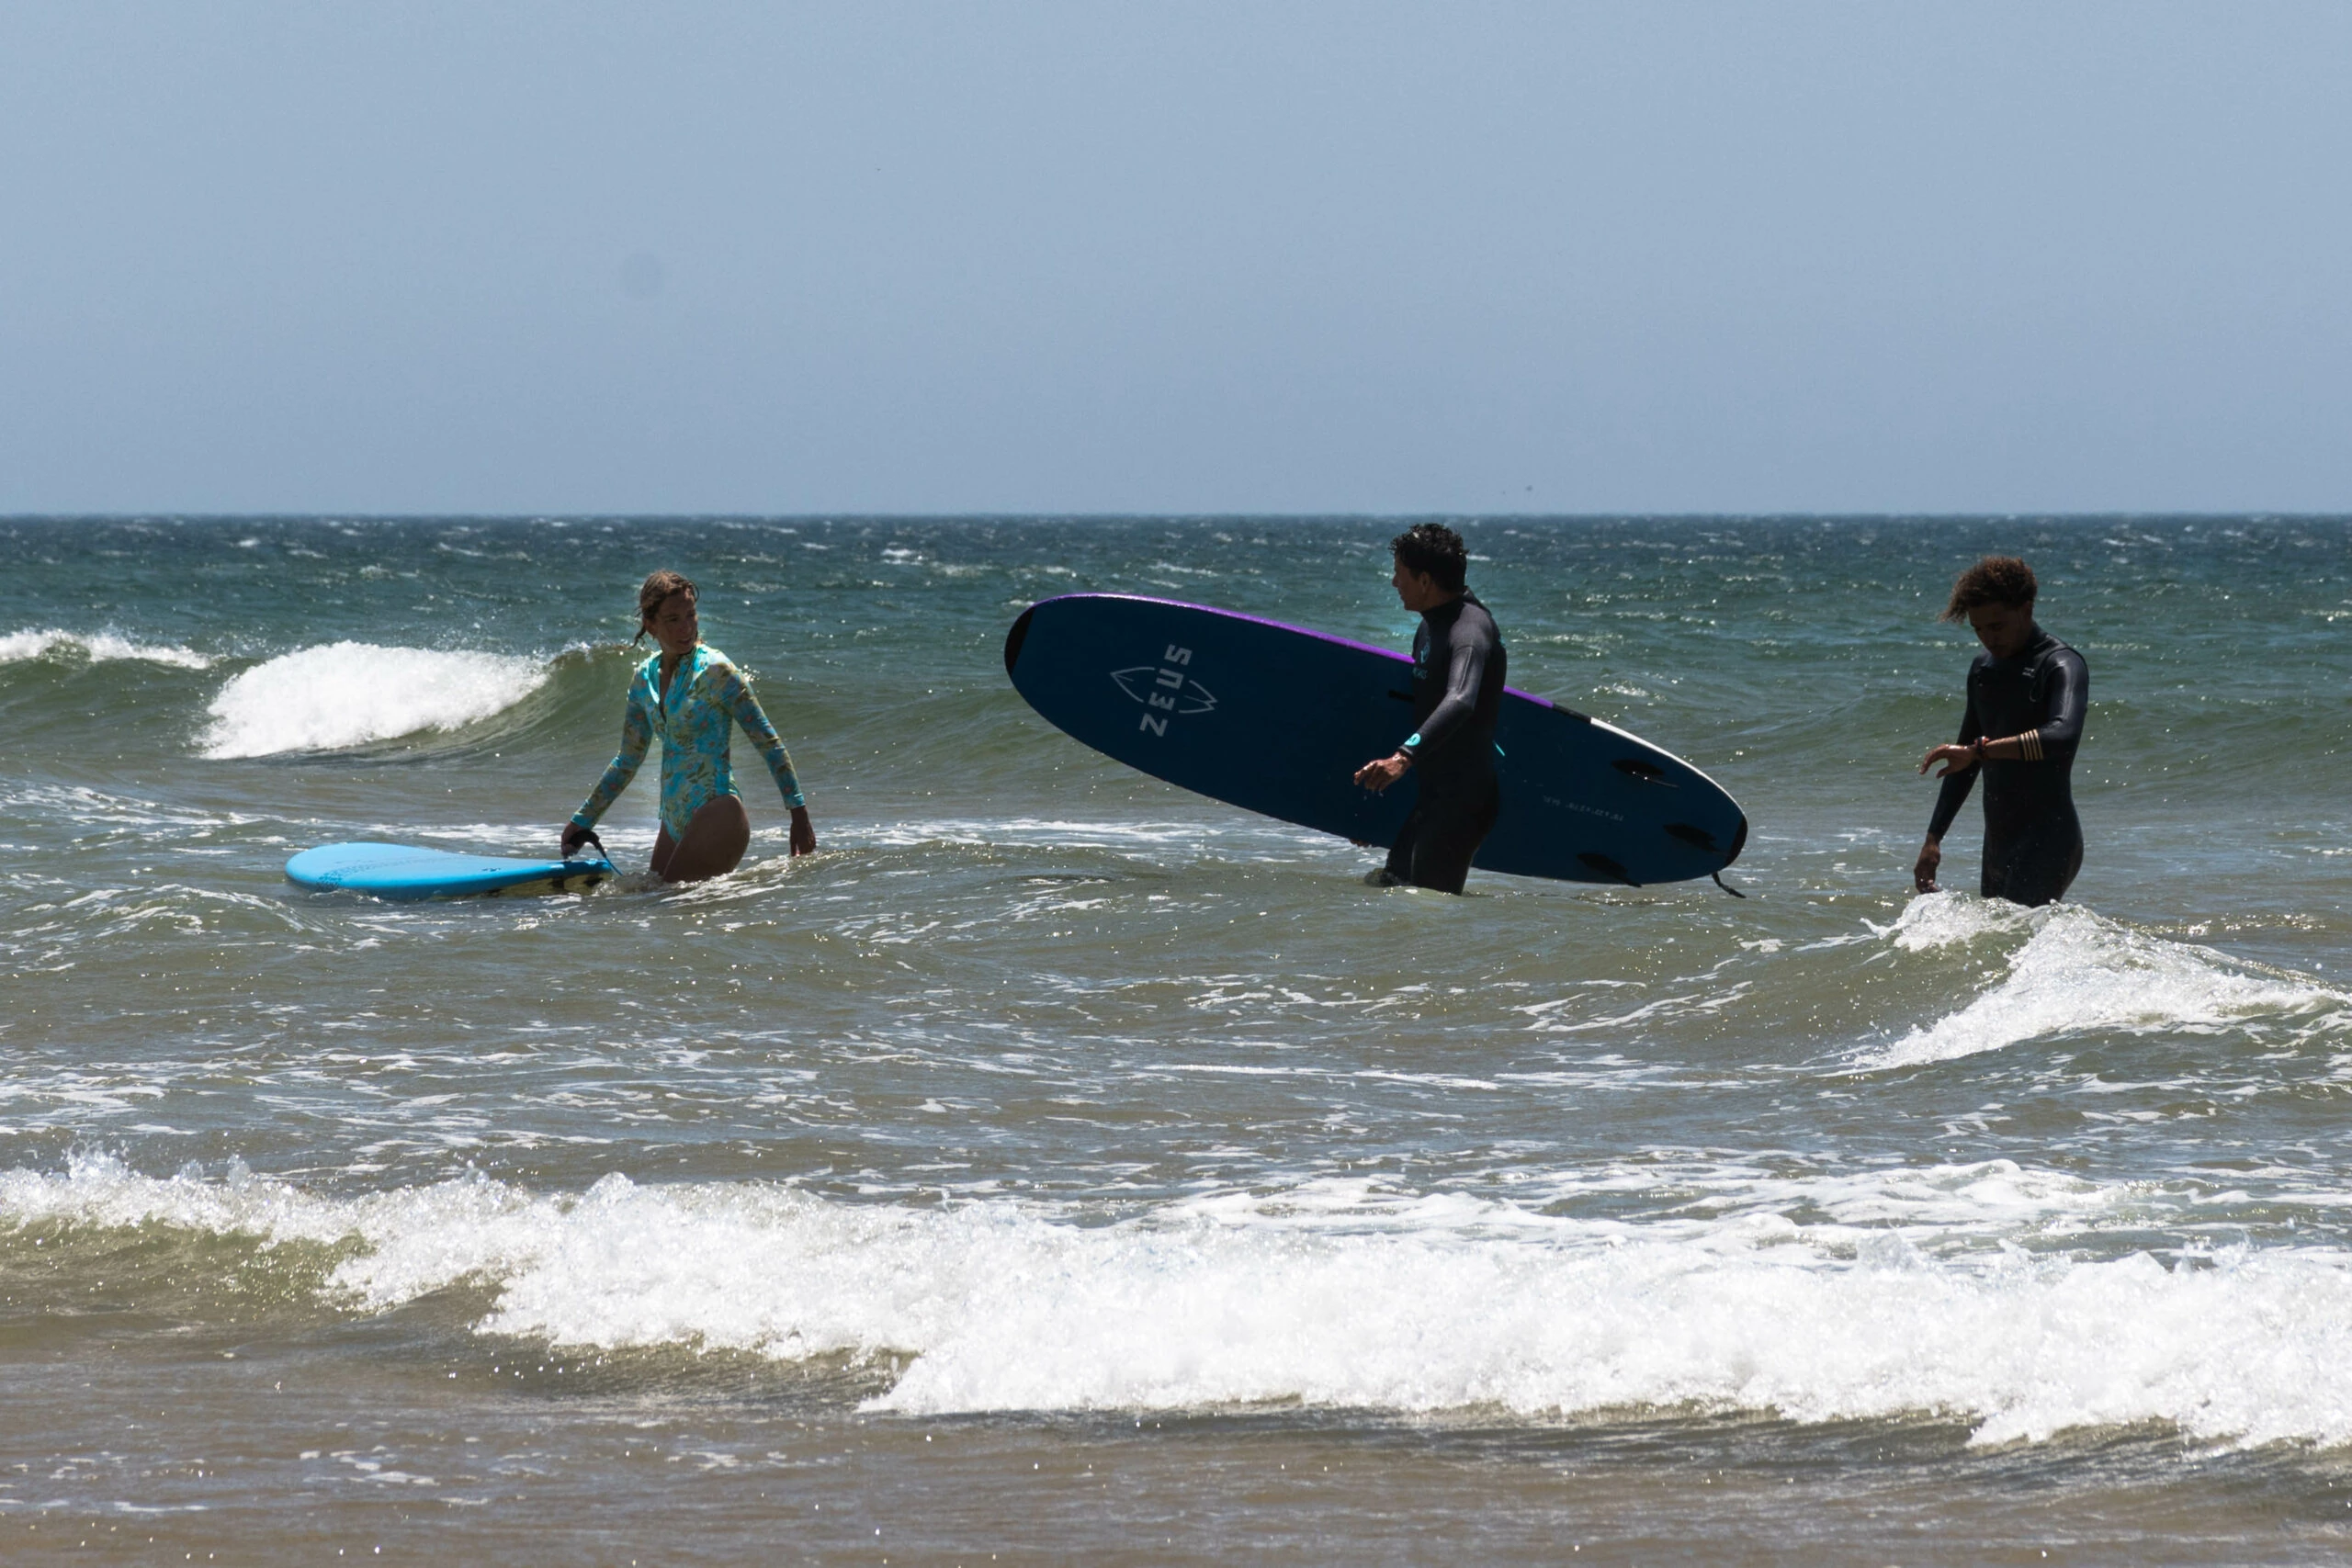 Sidi kaouki surfing